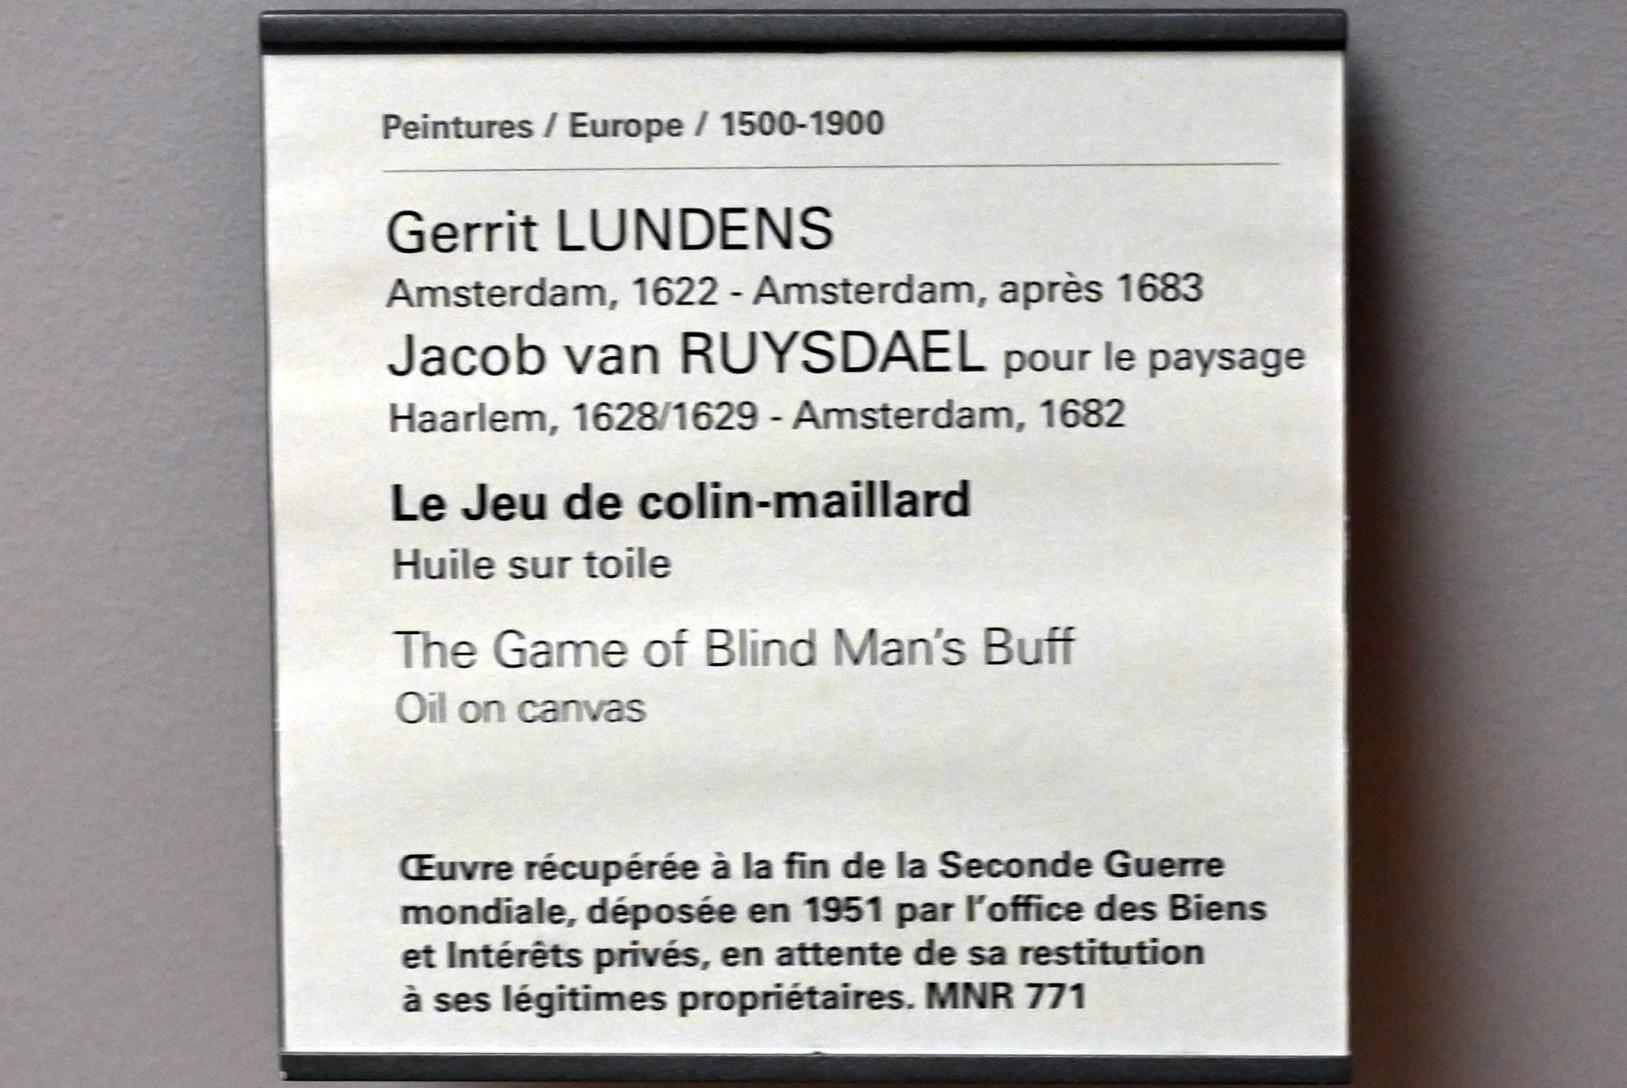 Gerrit Lundens (Undatiert), Blinde Kuh, Paris, Musée du Louvre, Saal 804, Undatiert, Bild 2/2